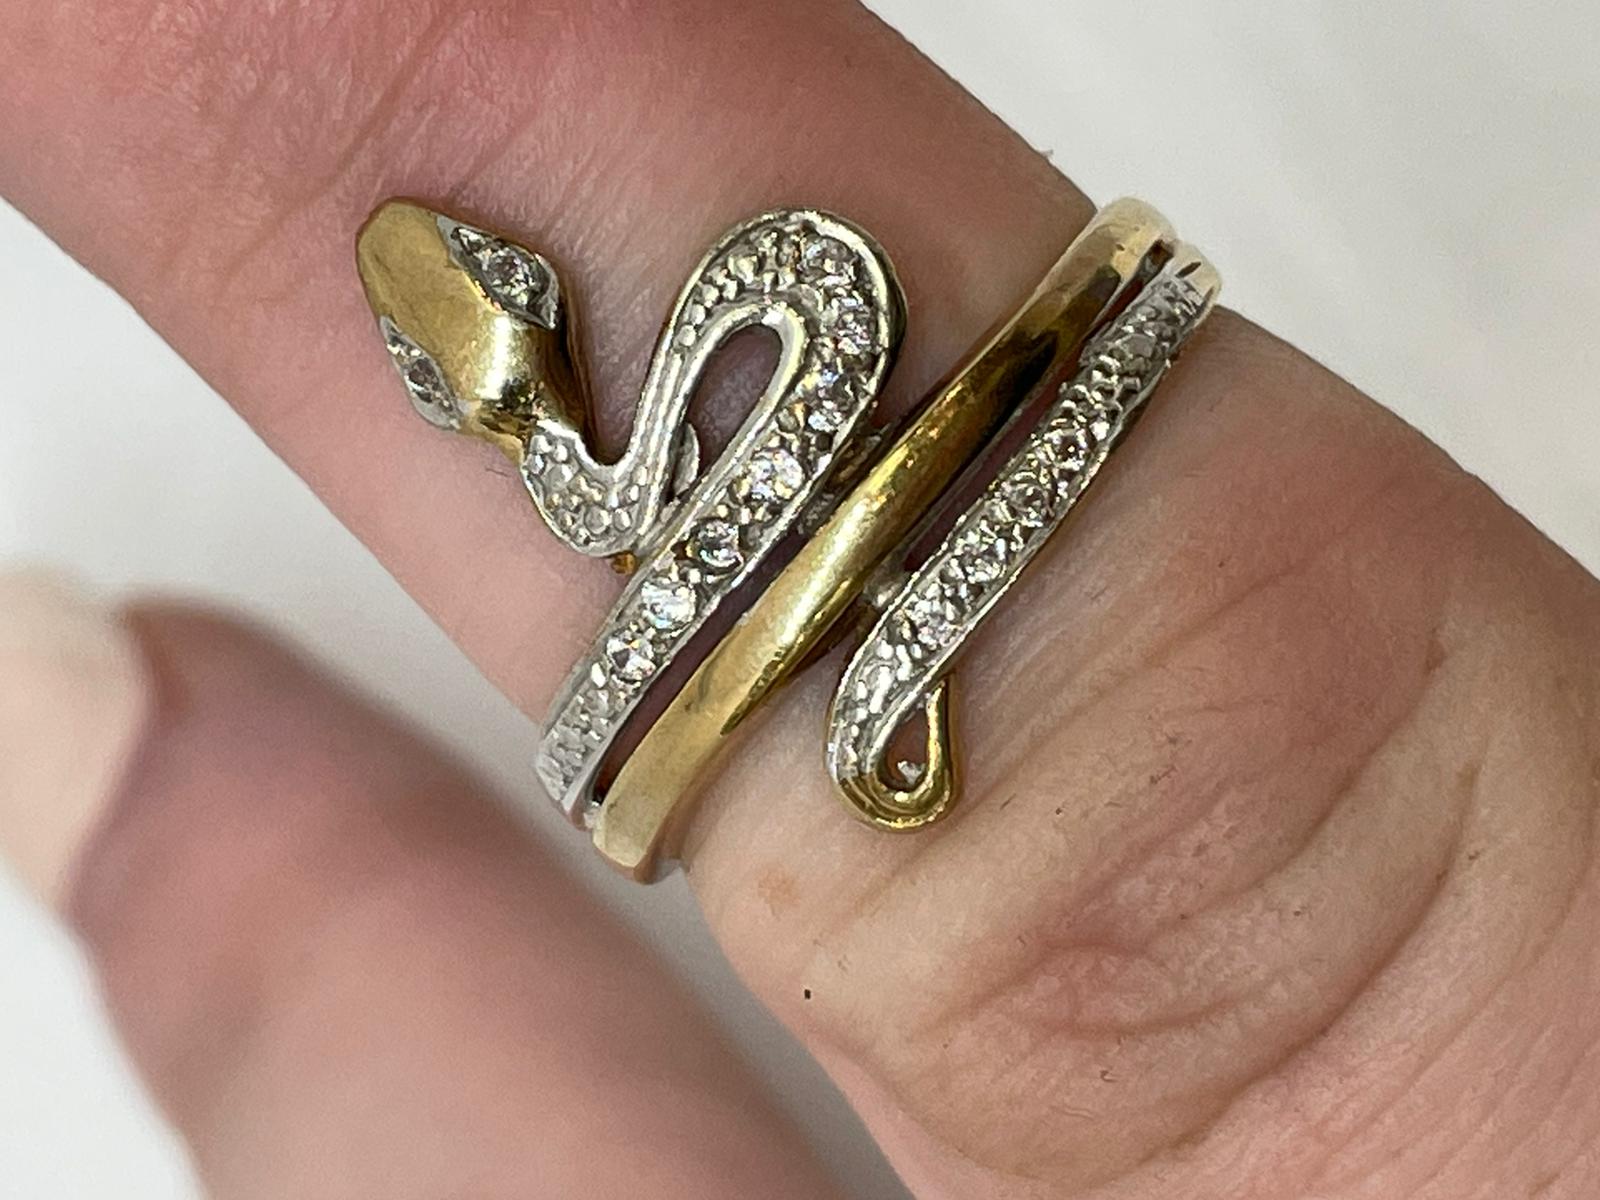 9ct gold snake ring - Image 3 of 3